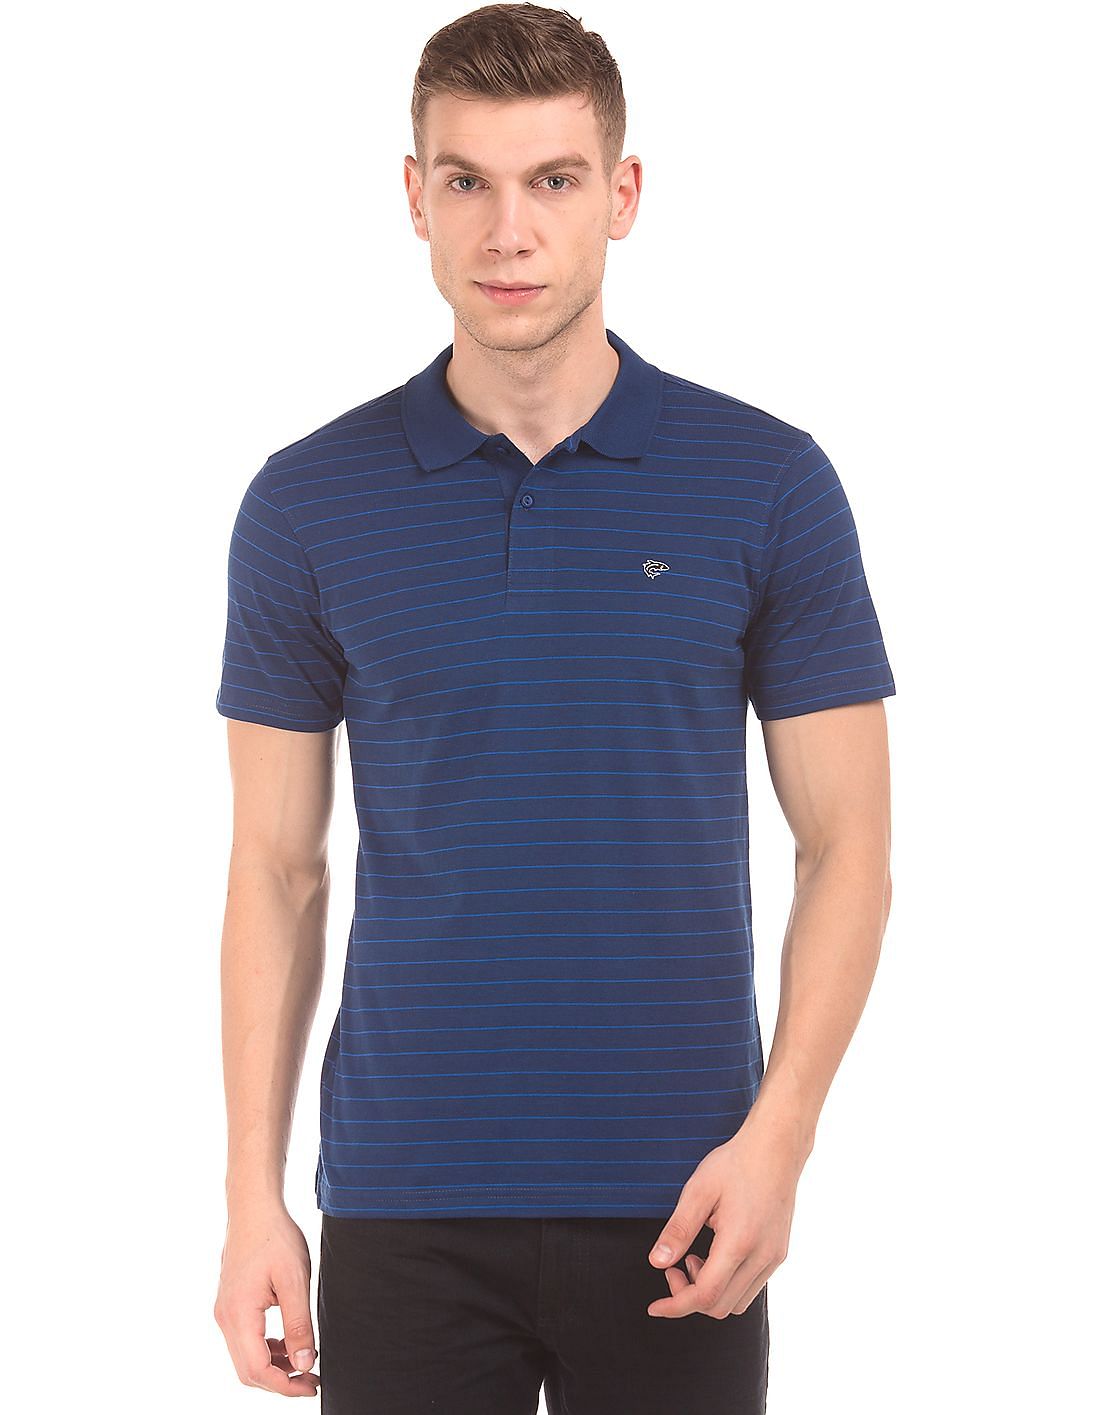 Buy Ruggers Striped Jersey Polo Shirt - NNNOW.com